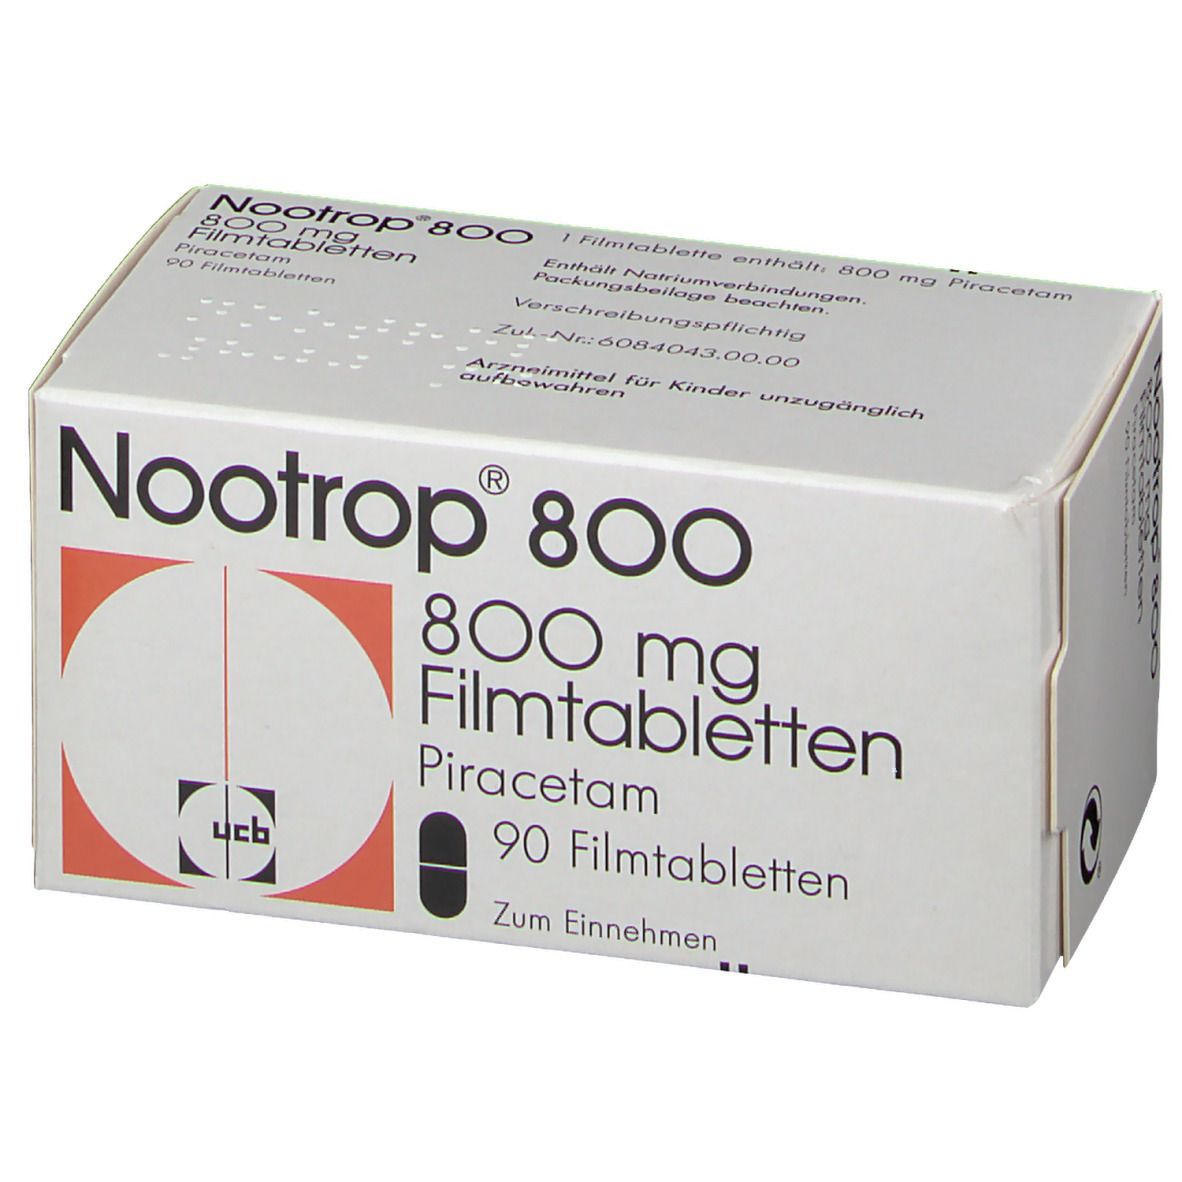 Nootrop® 800 mg